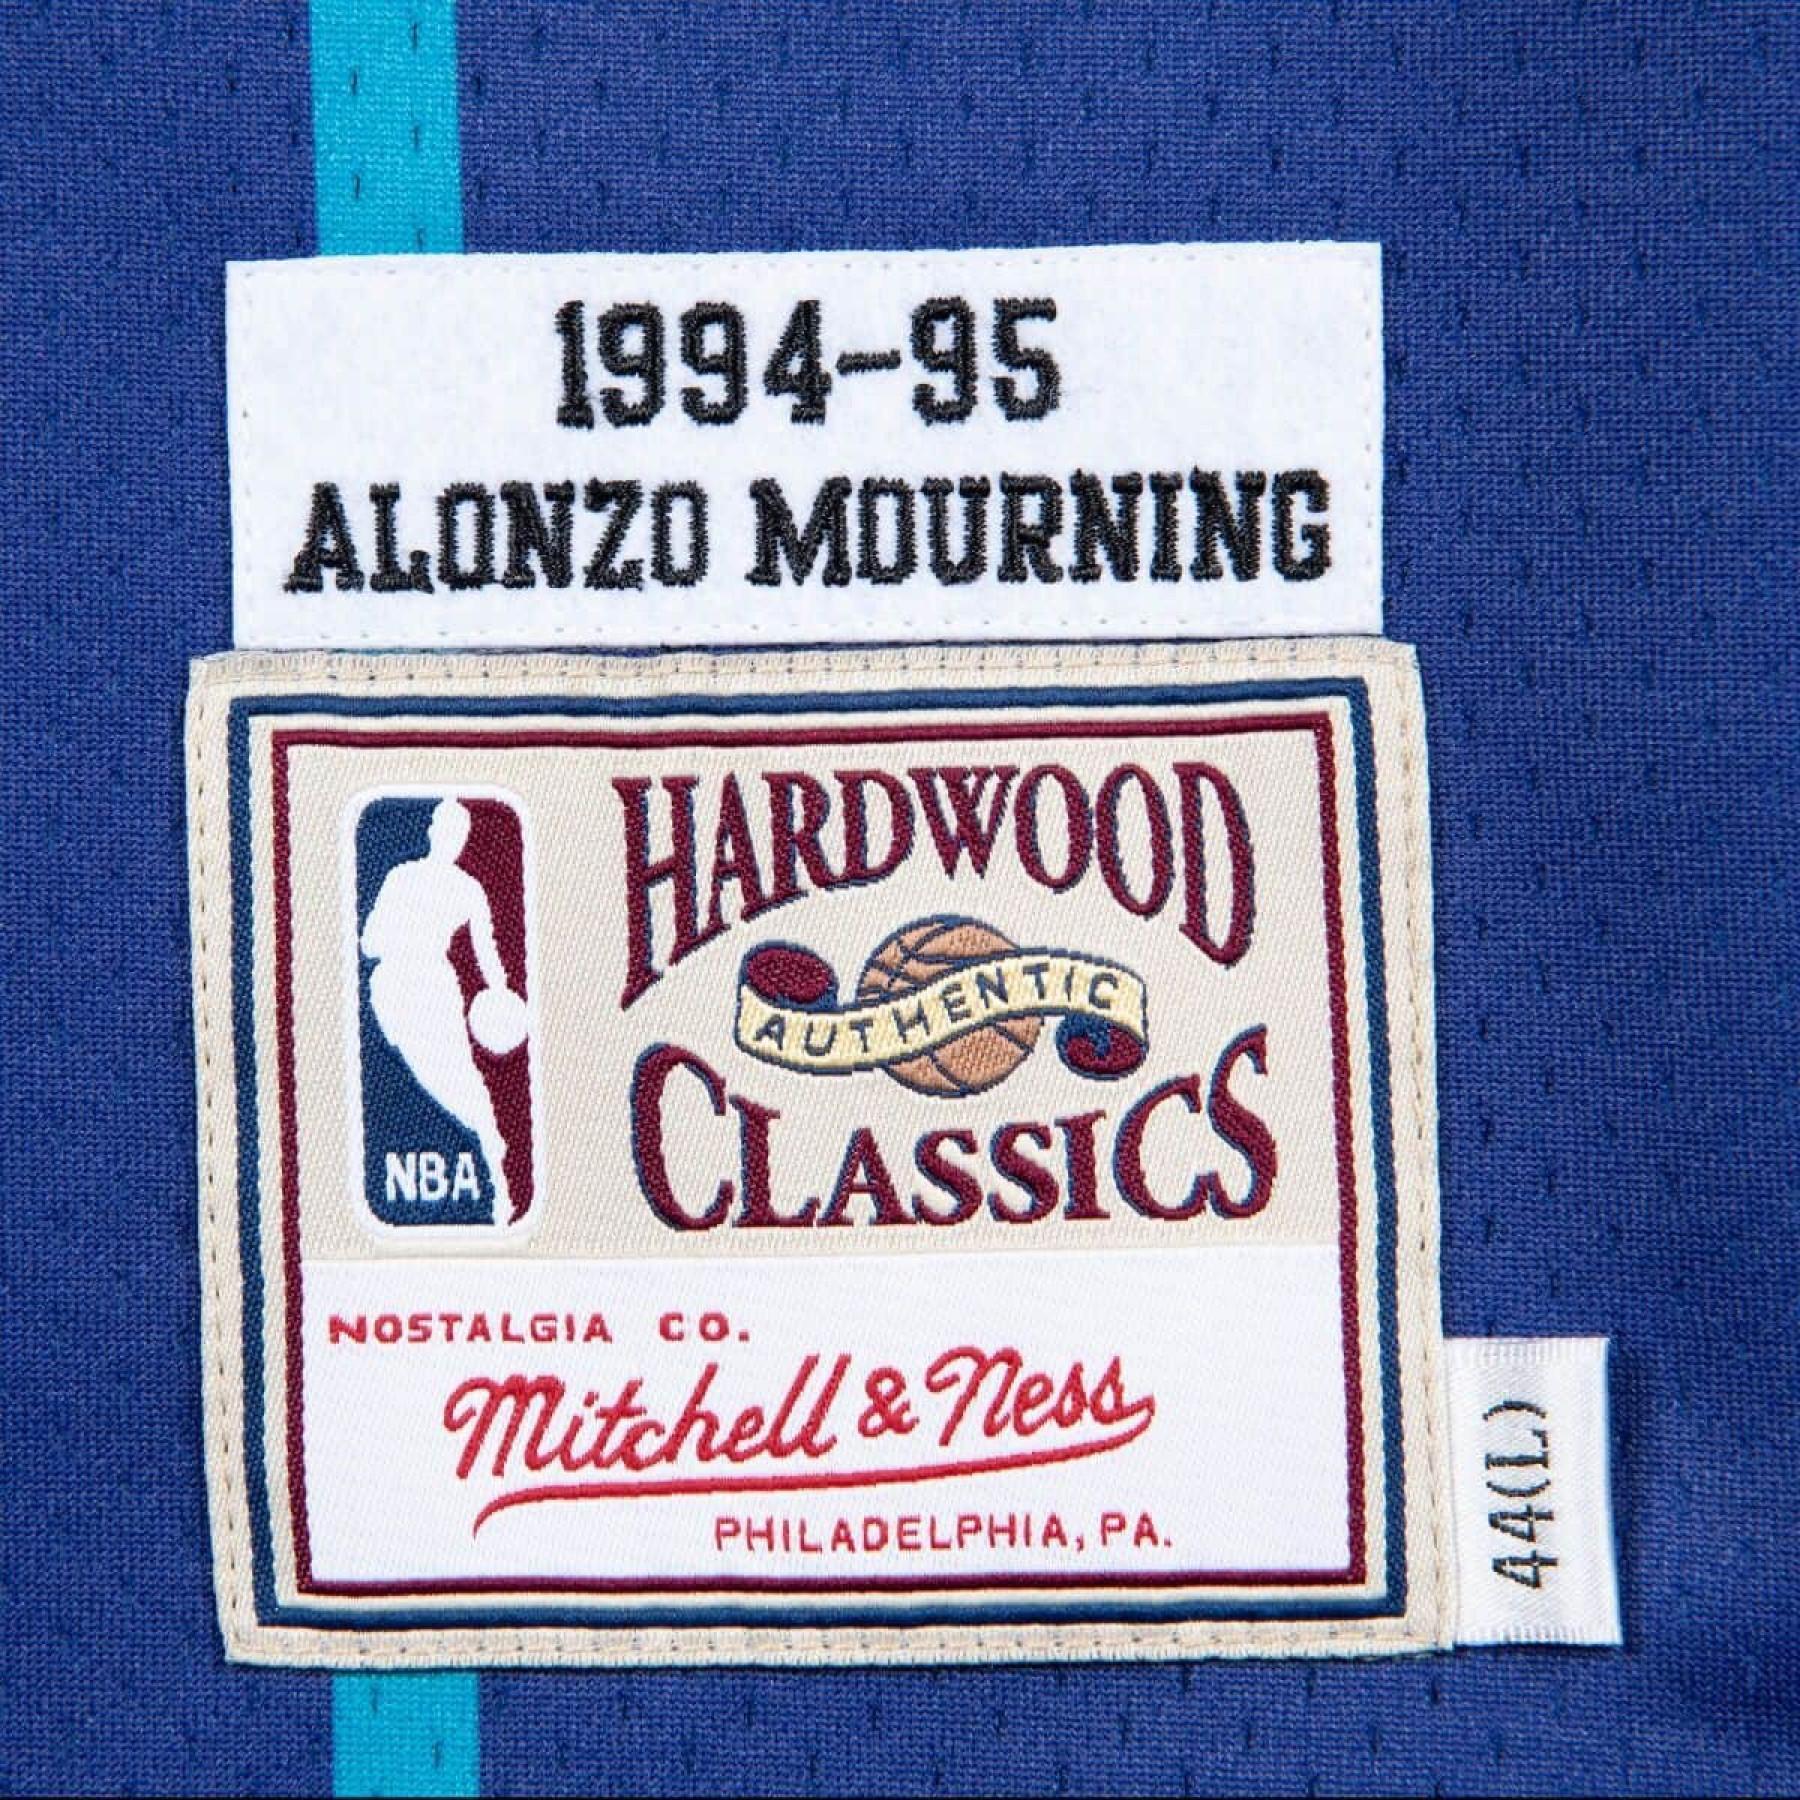 Authentiek shirt Charlotte Hornets Alonzo Mourning 1995